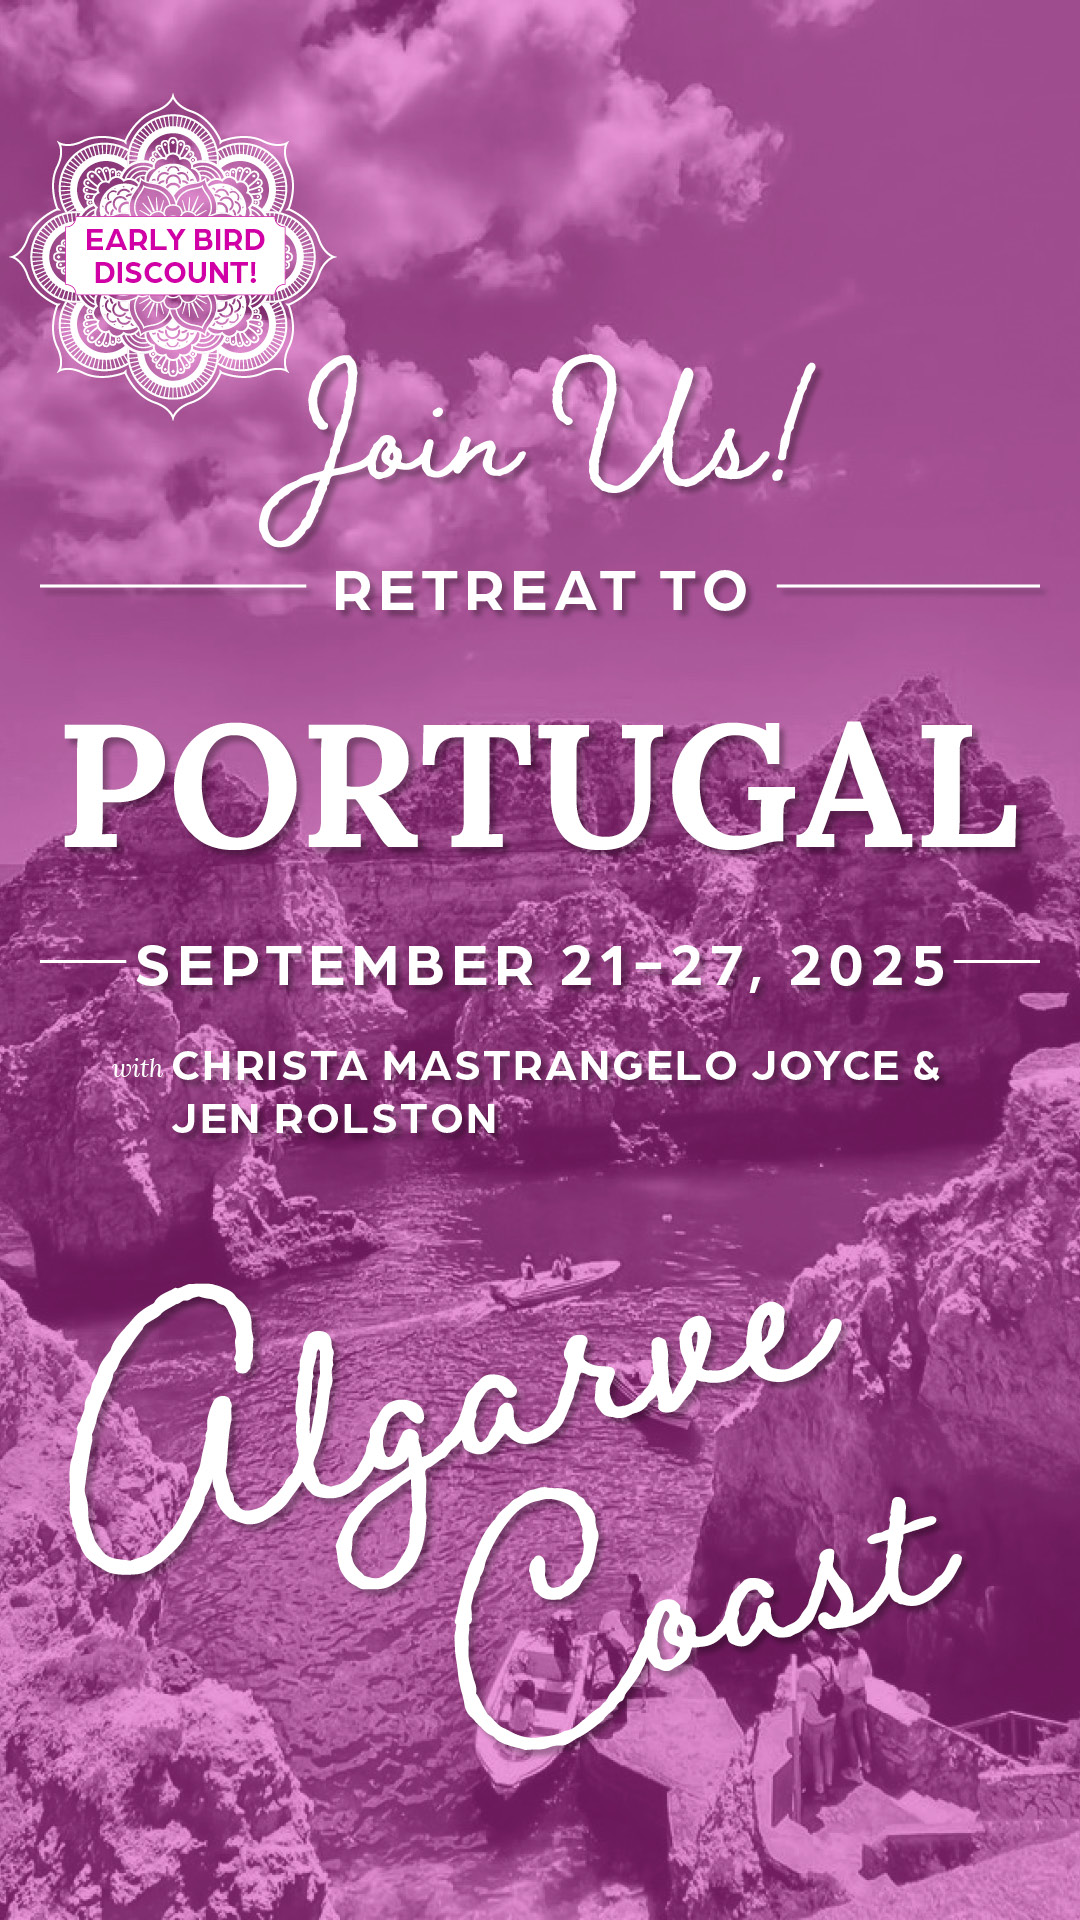 Portugal Retreat 2025